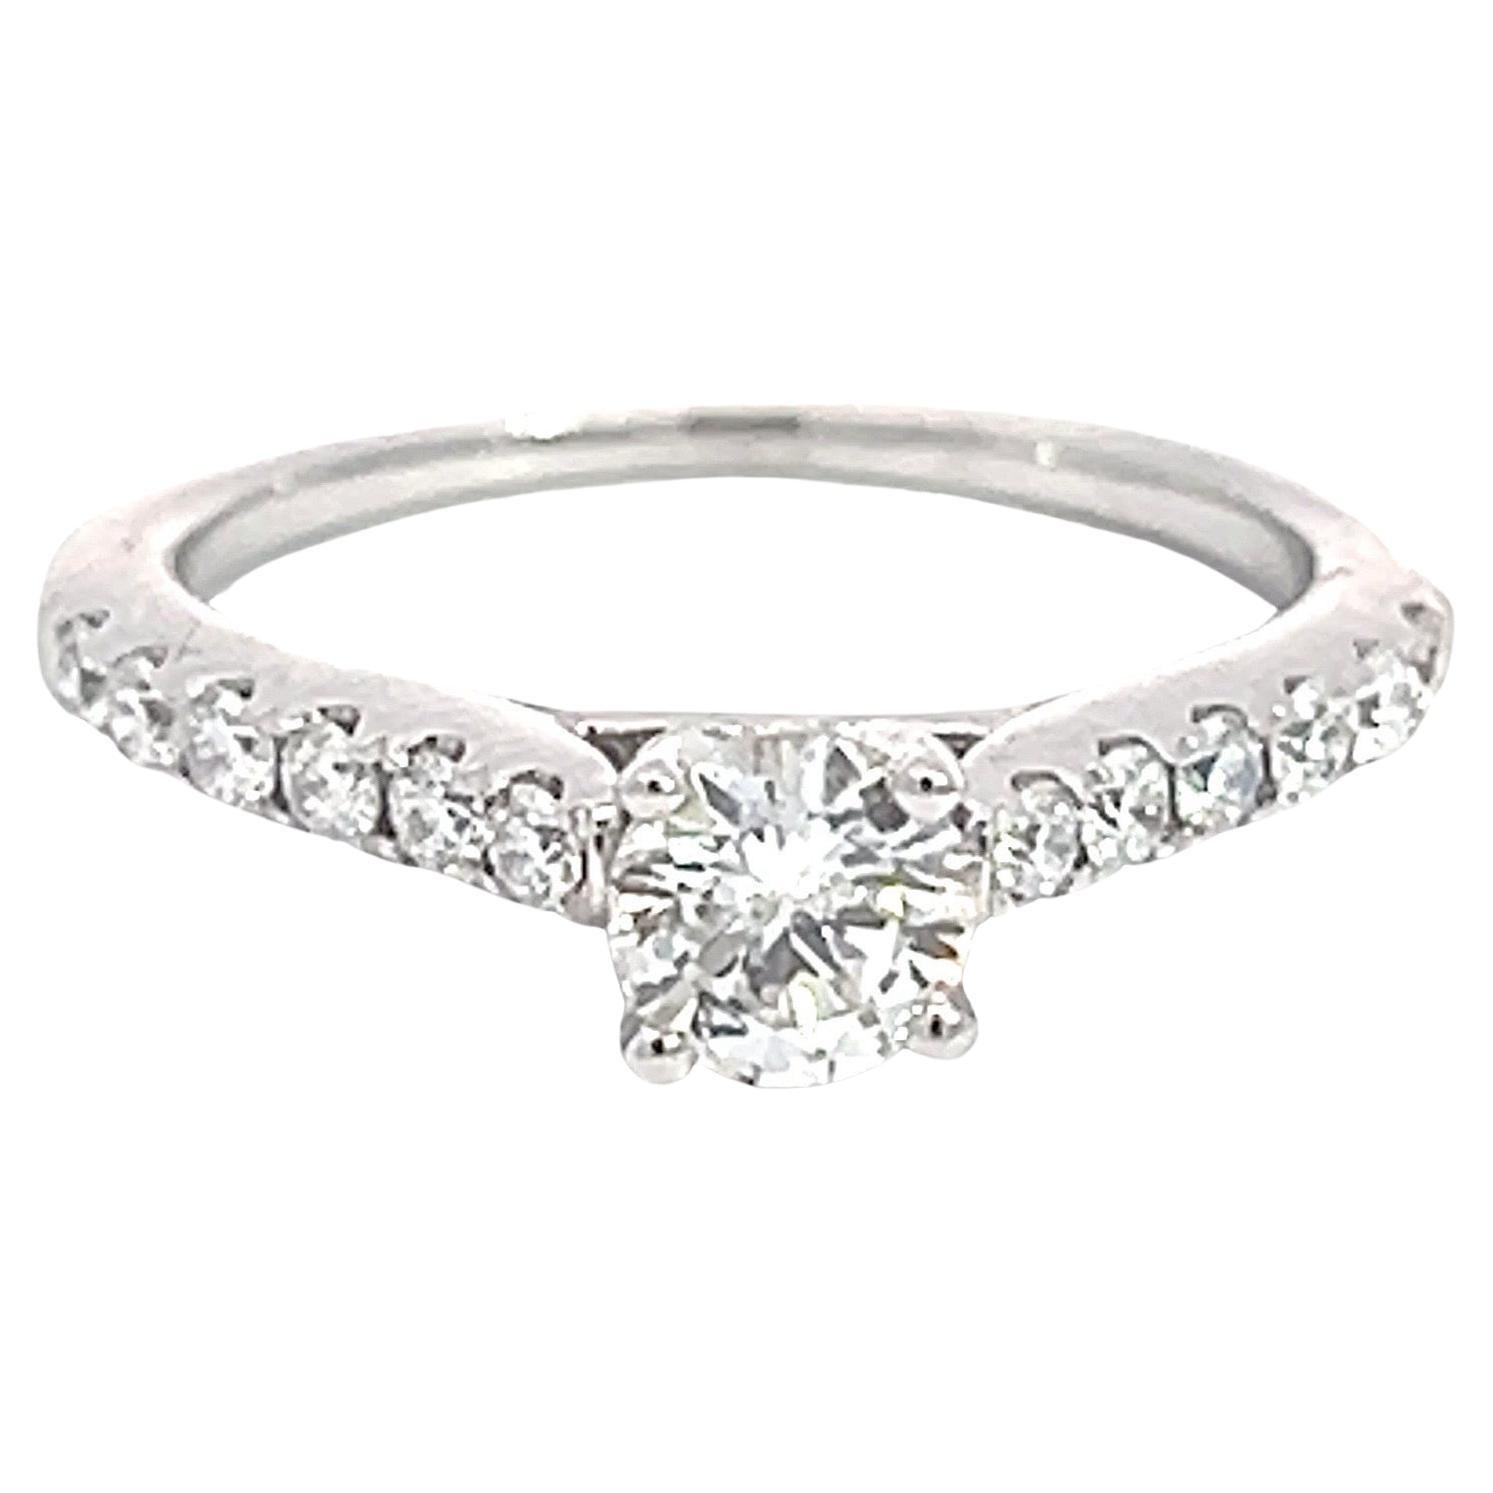 Solitaire Diamond Engagement Ring, 14k White Gold Natural Full Cut Diamonds 0.82